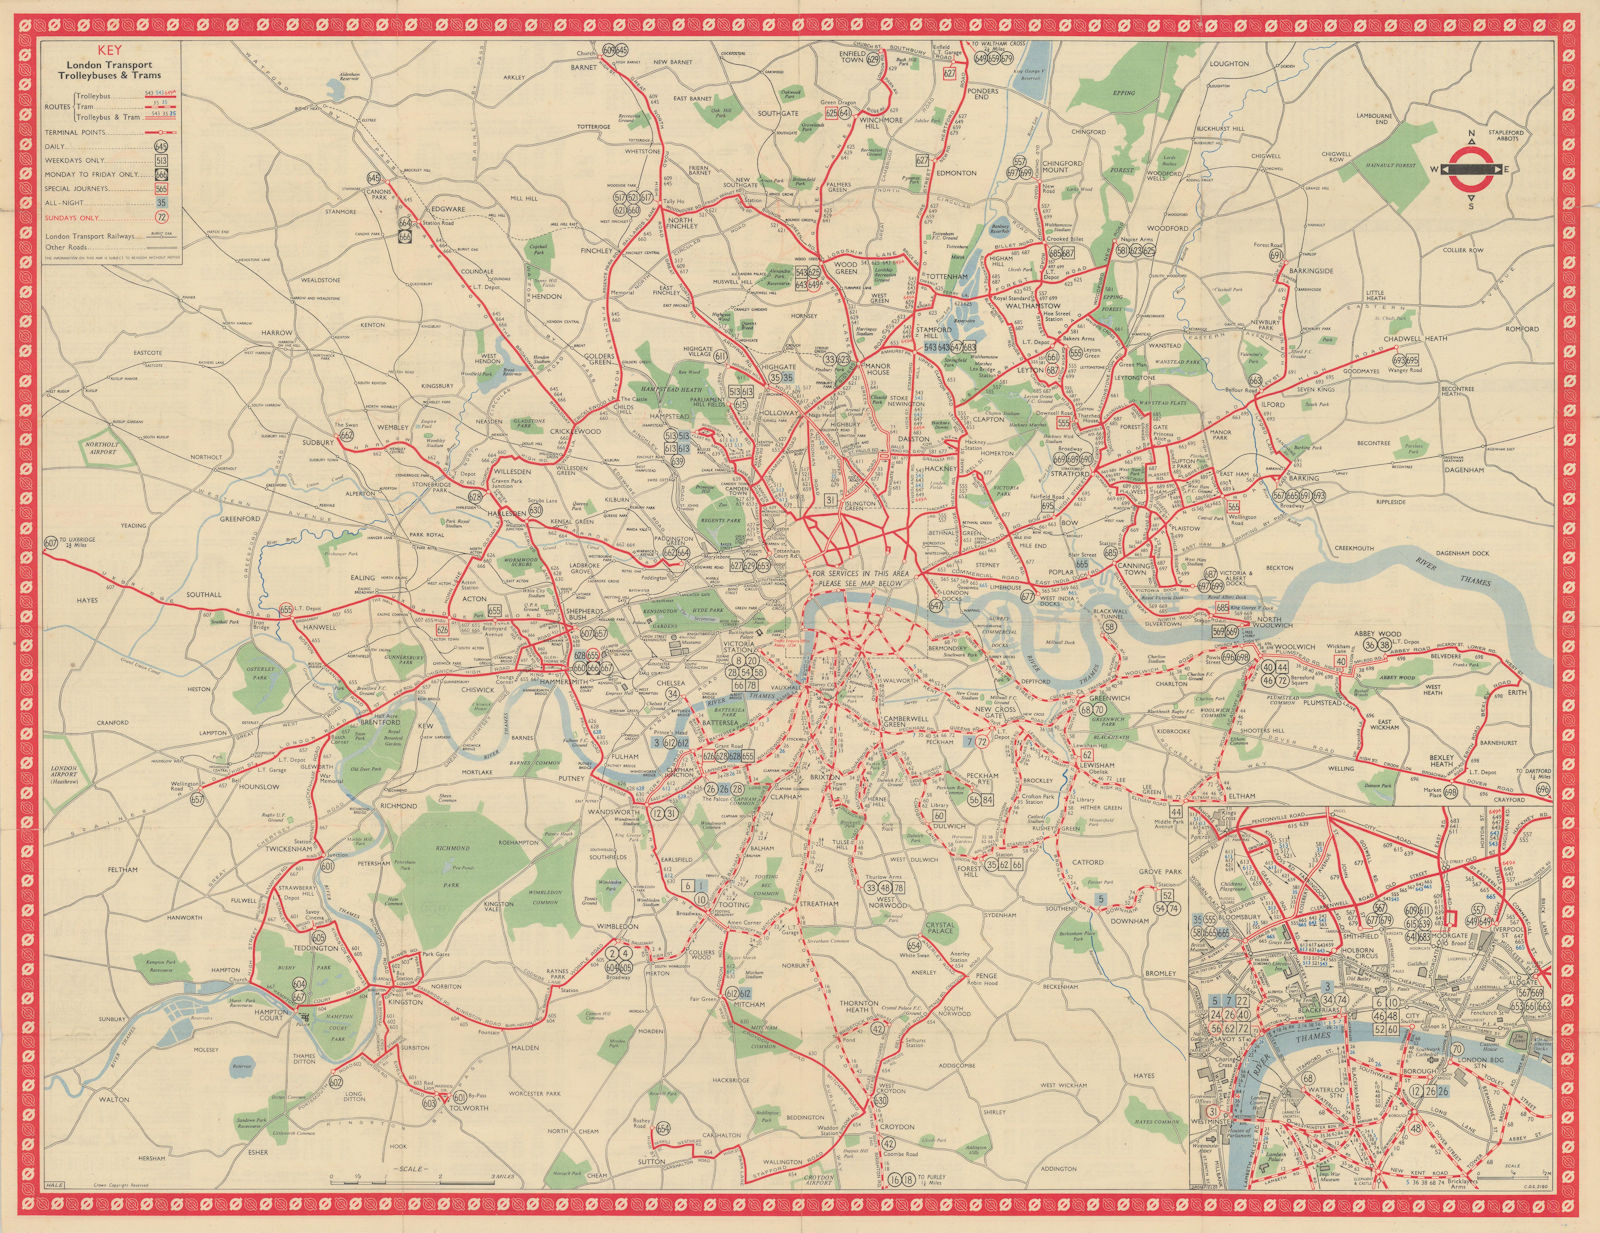 London Transport Trolleybus & Tram route map 1149. HALE January 1950 old